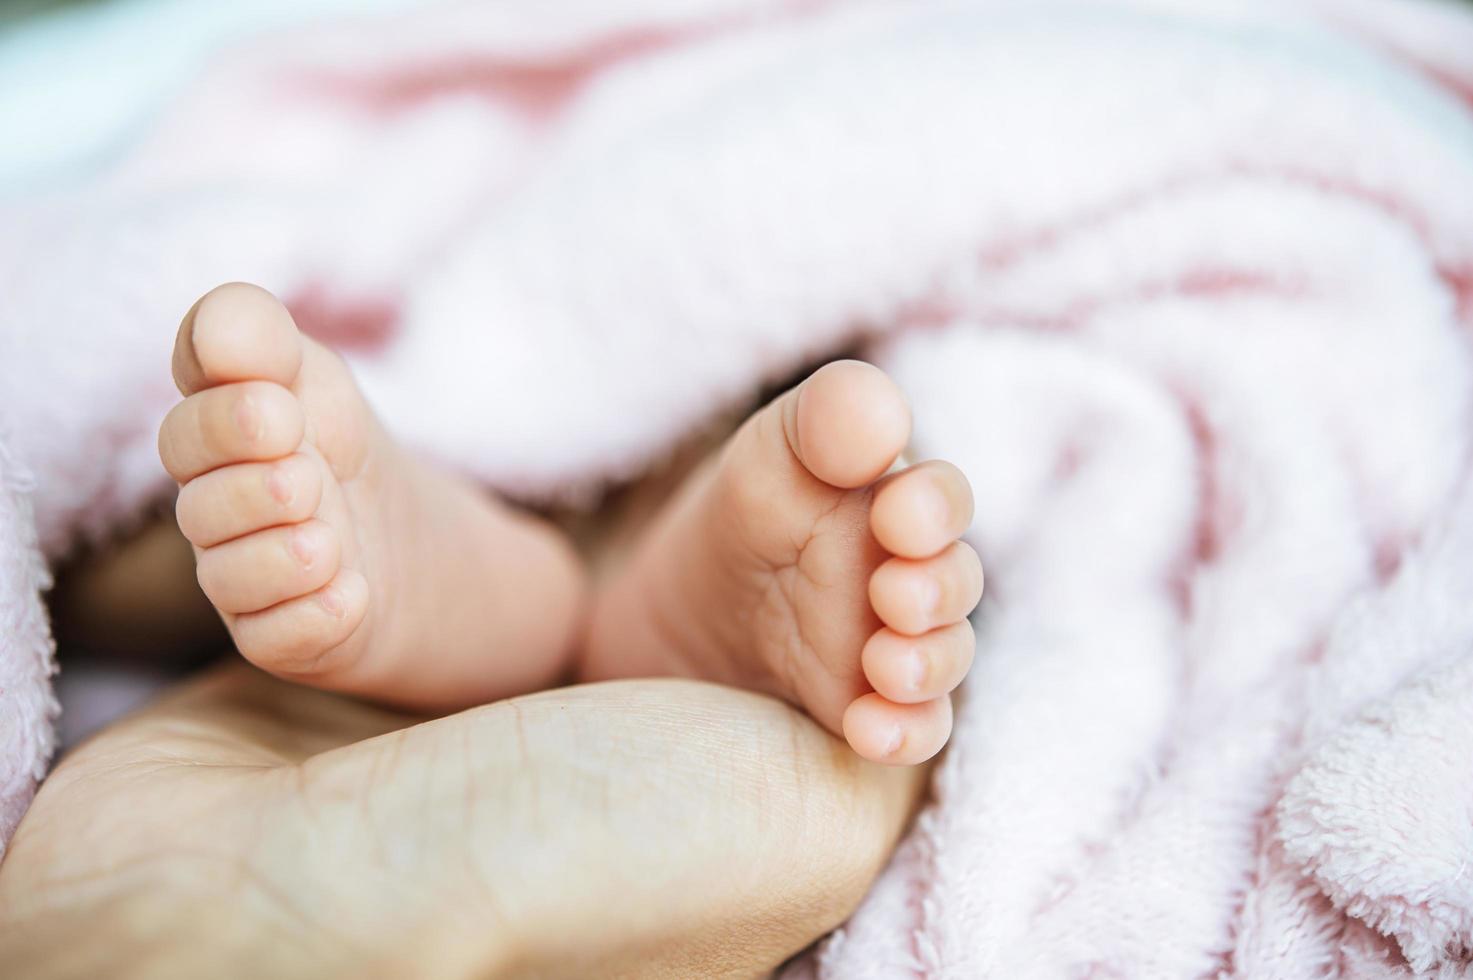 Newborn baby feet on mother's hand photo